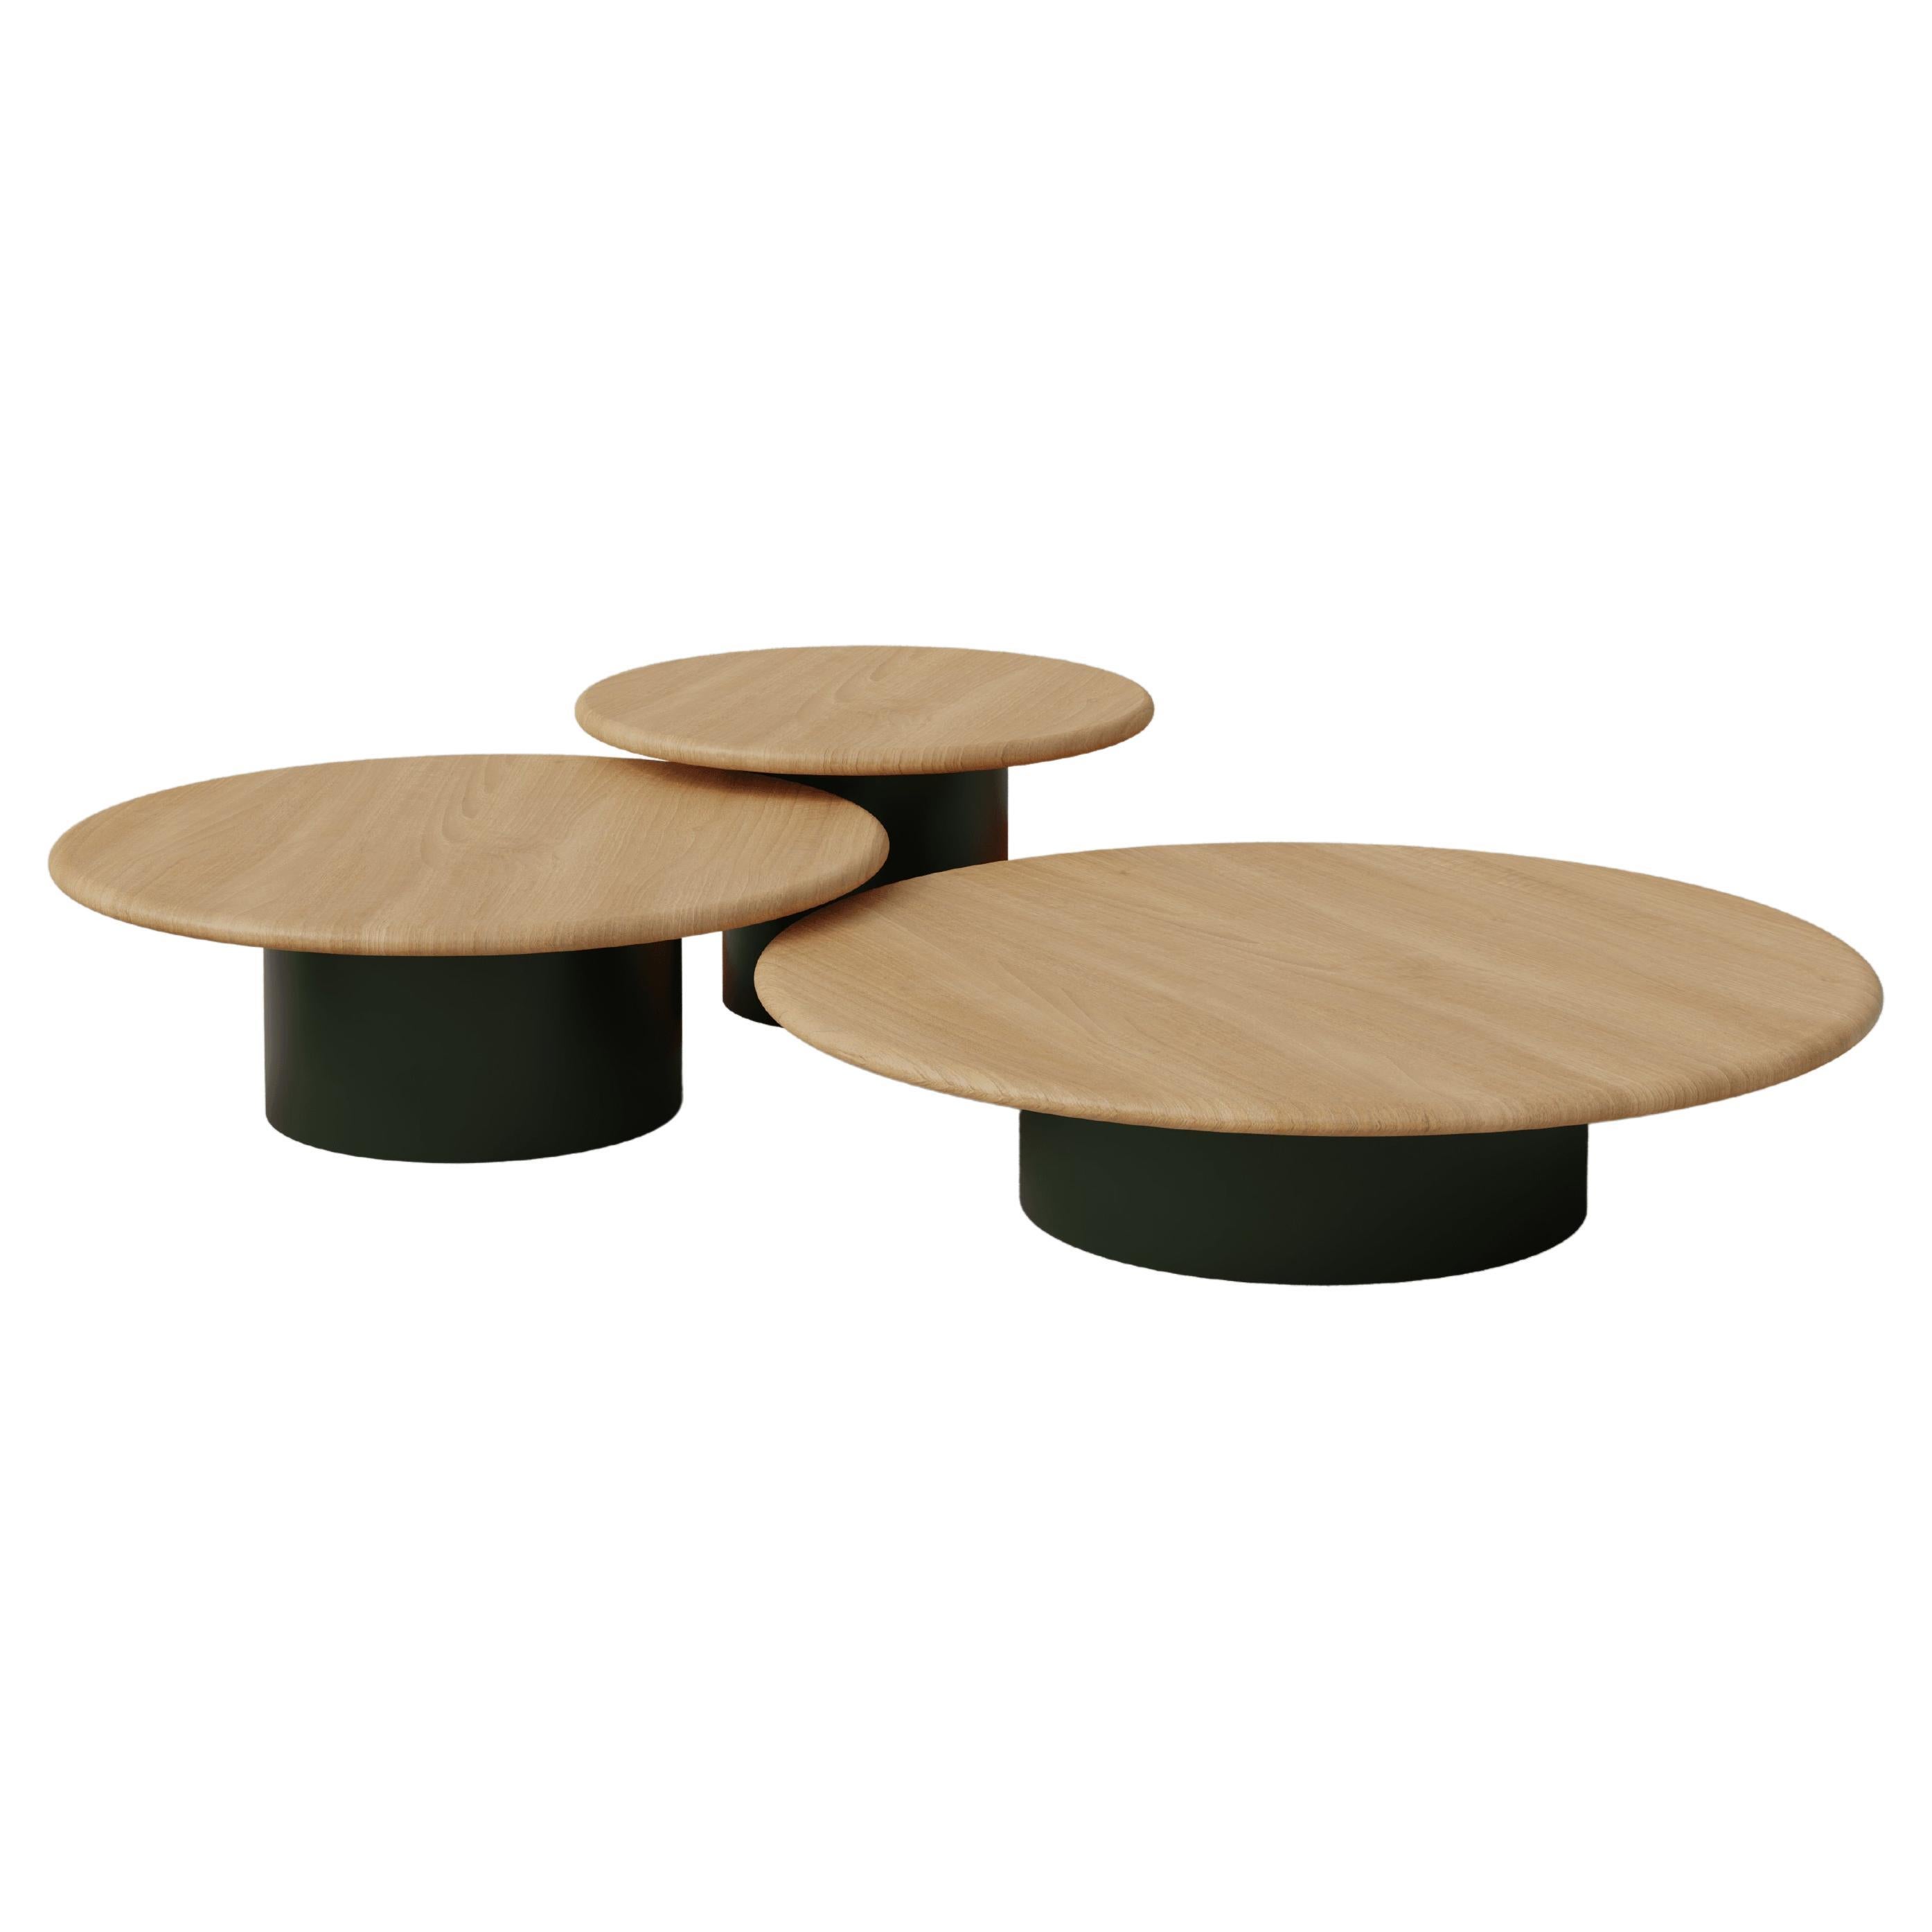 Raindrop Coffee Table Set, 600, 800, 1000, Oak / Moss Green For Sale